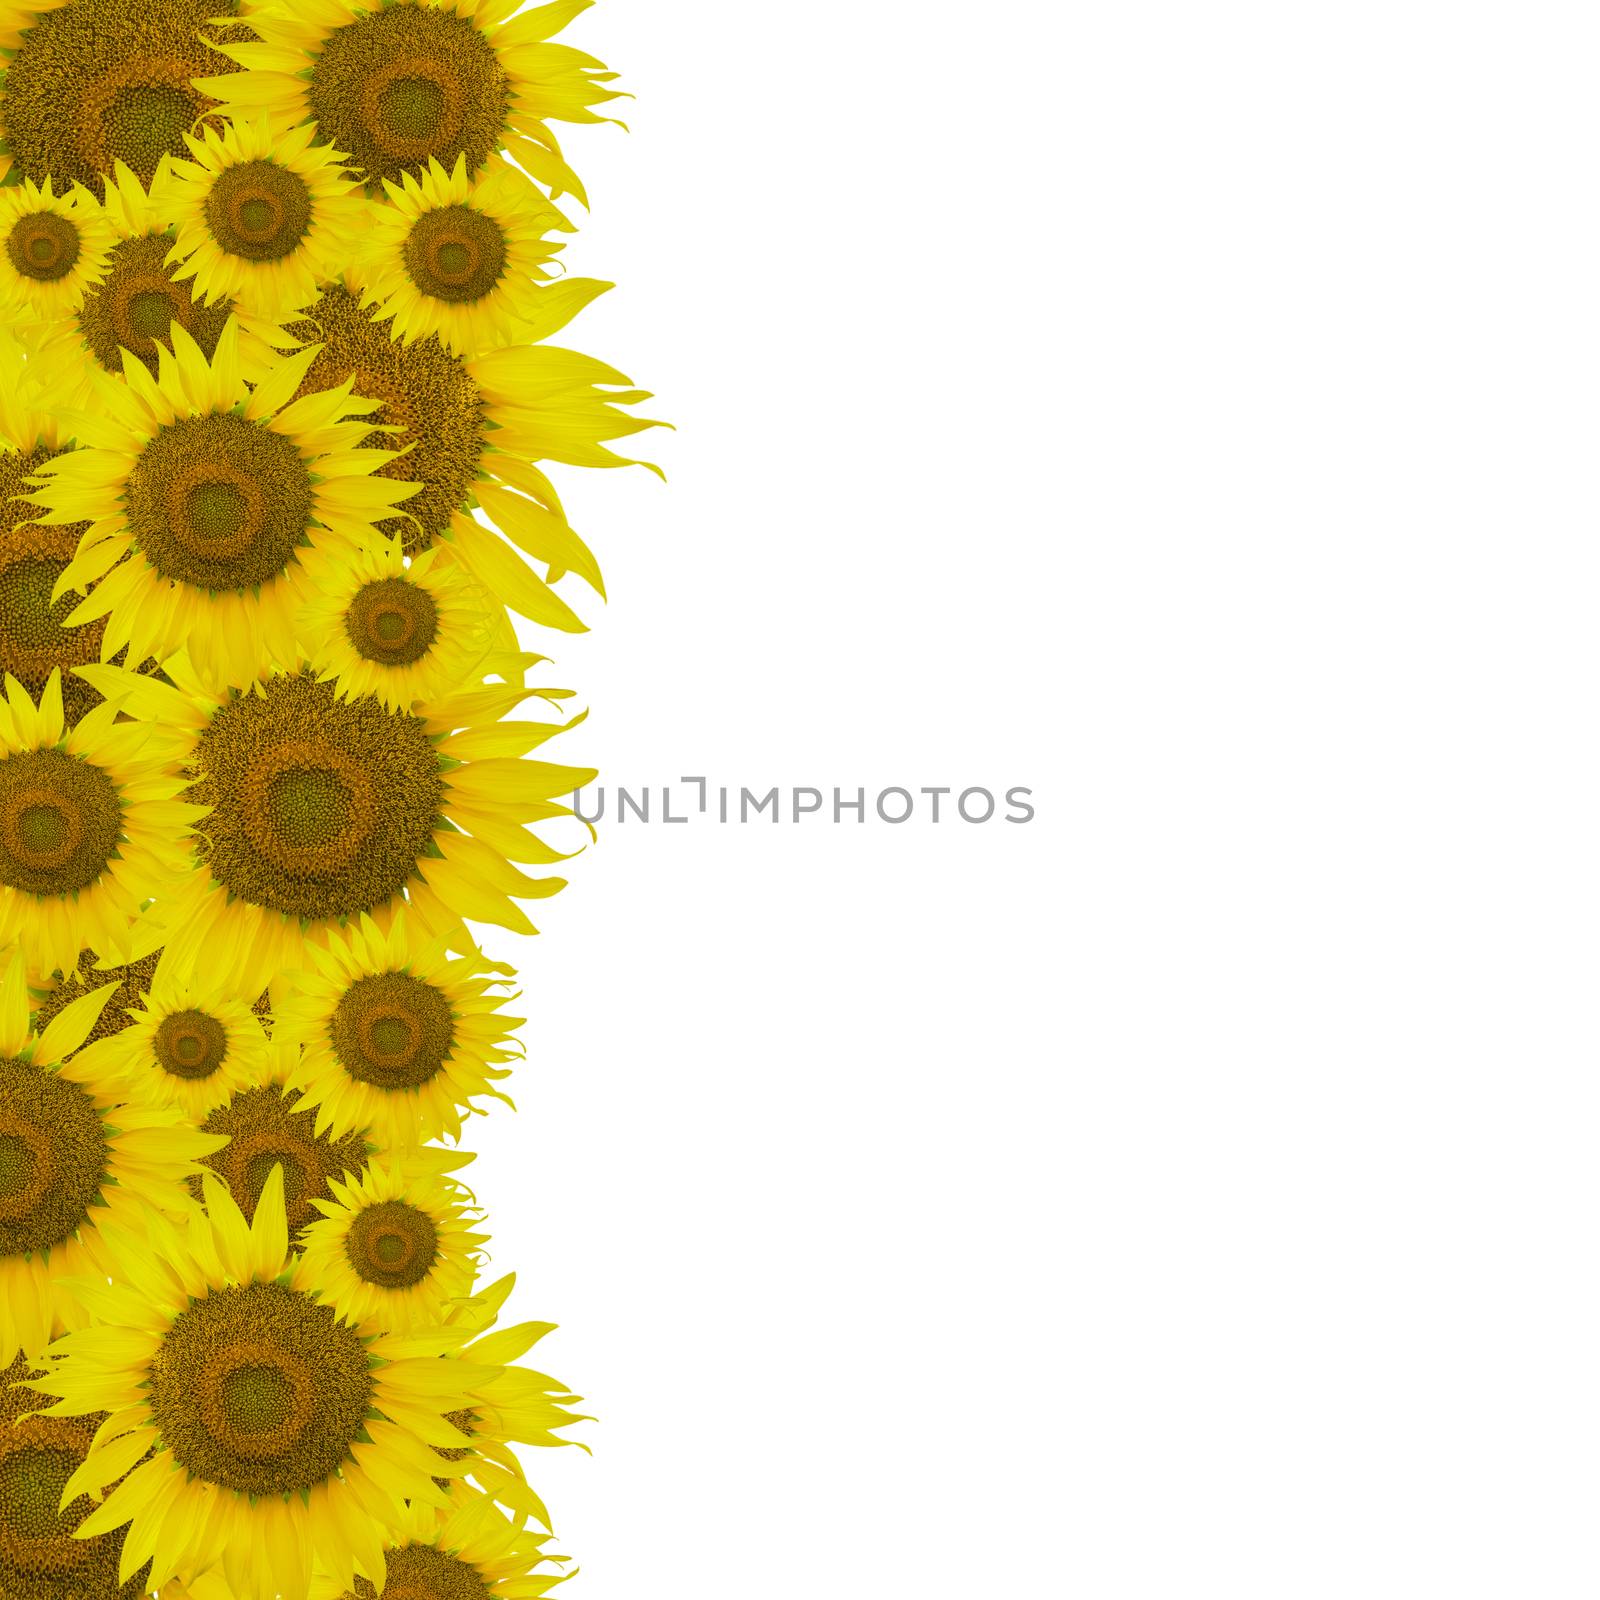 Beautiful yellow flower, sunflower pattern, nature abstract background